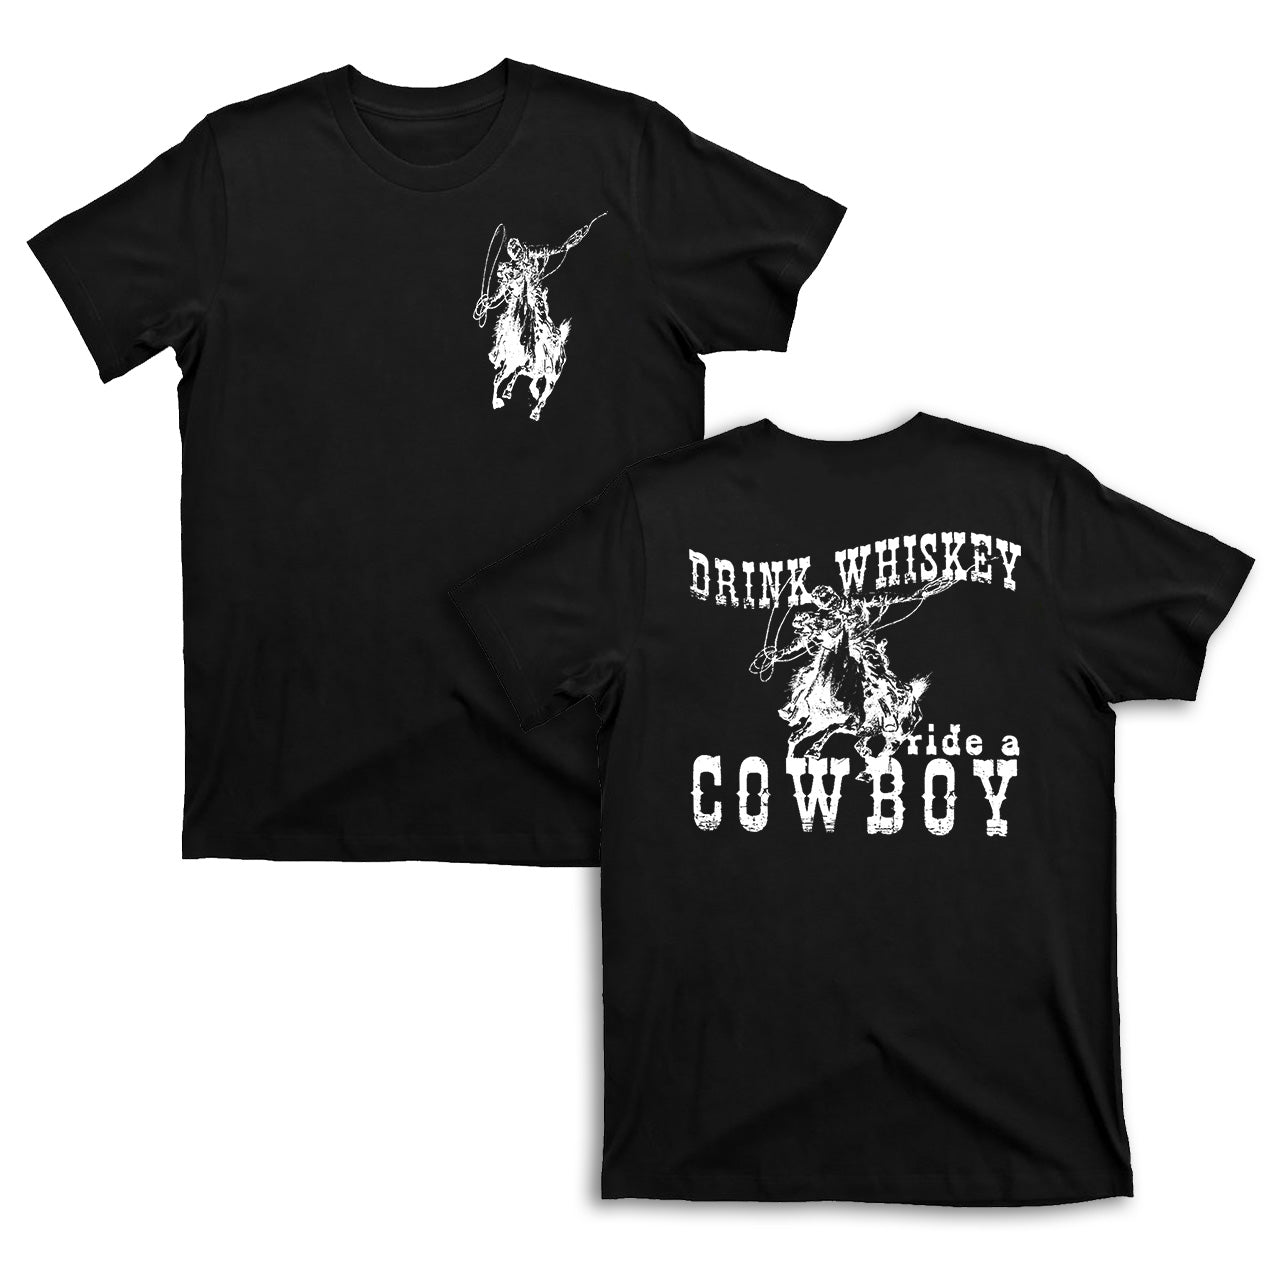 Drink Whiskey Ride a Cowboy T-shirts